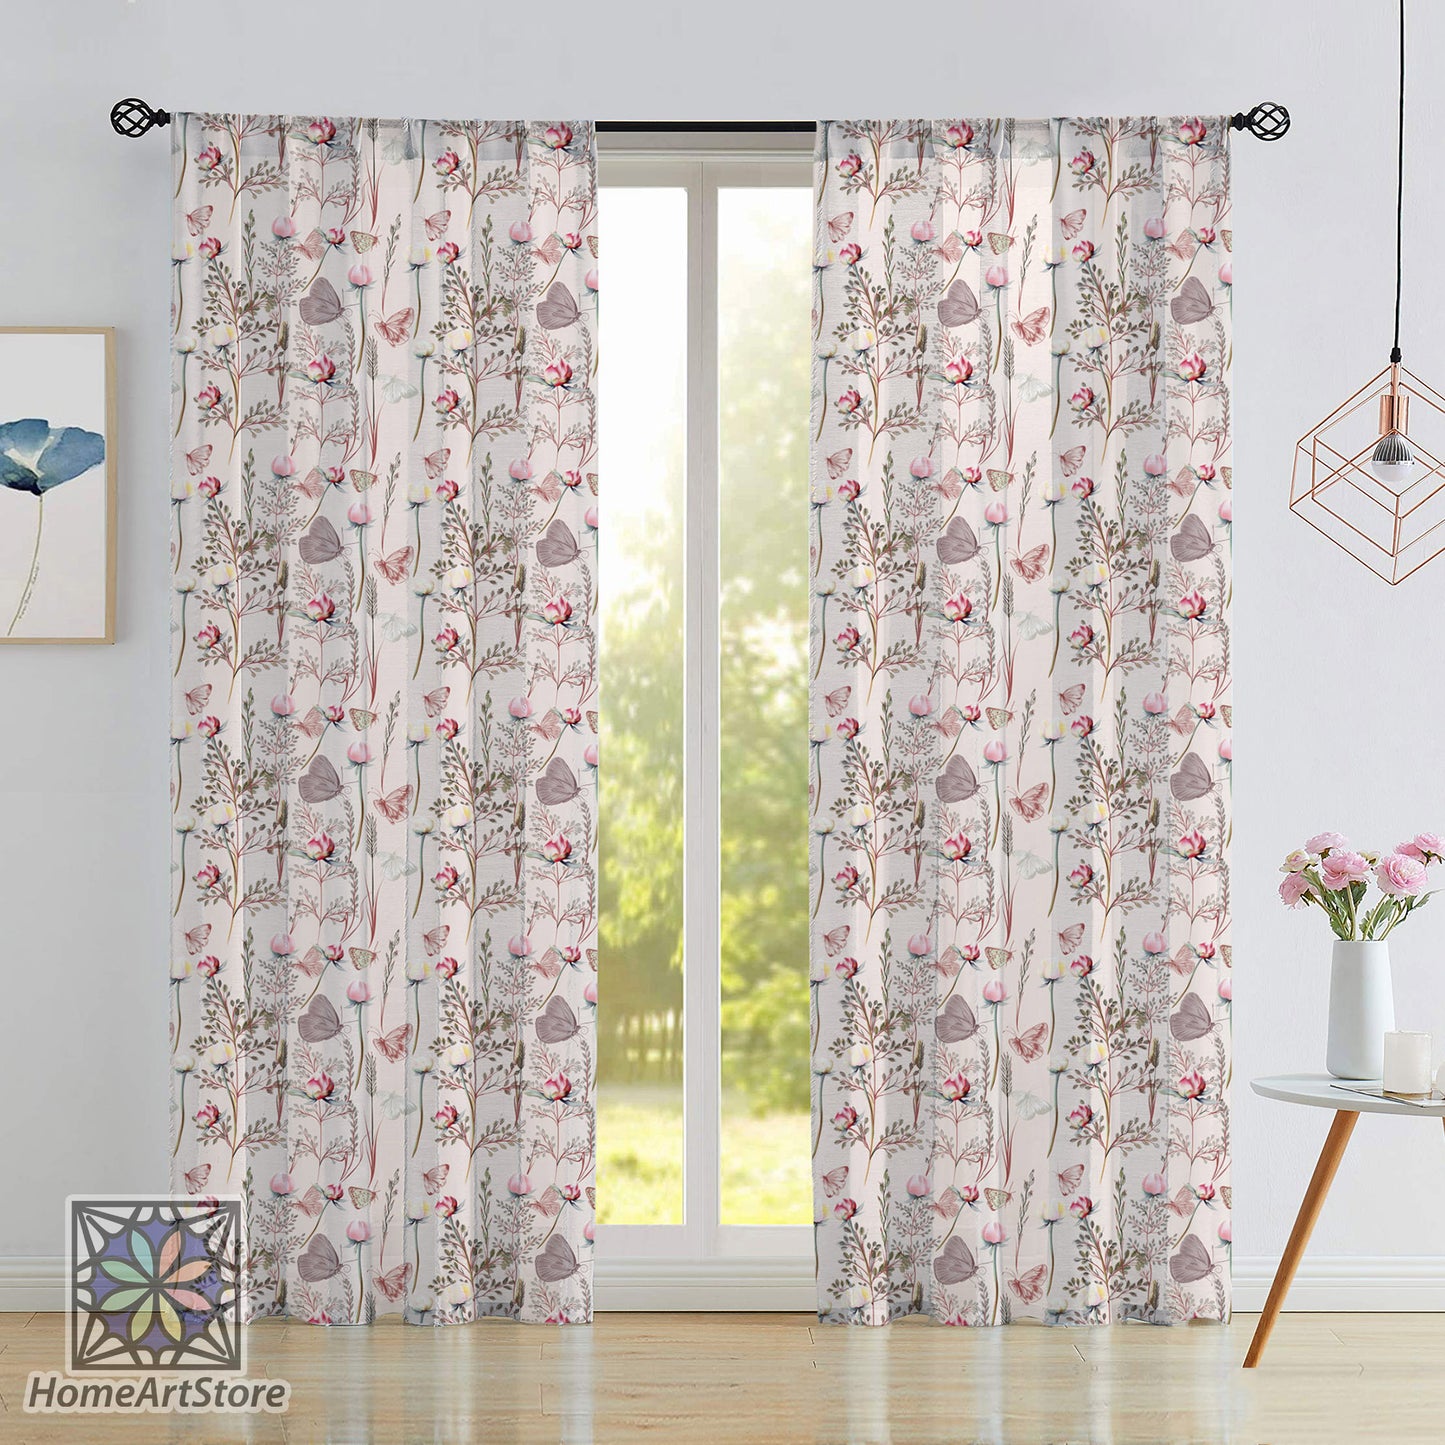 Butterflies Pattern Curtain, Flowers Curtain, Decorative Living Room Curtain, Kitchen Floral Curtain, Botanic Decor